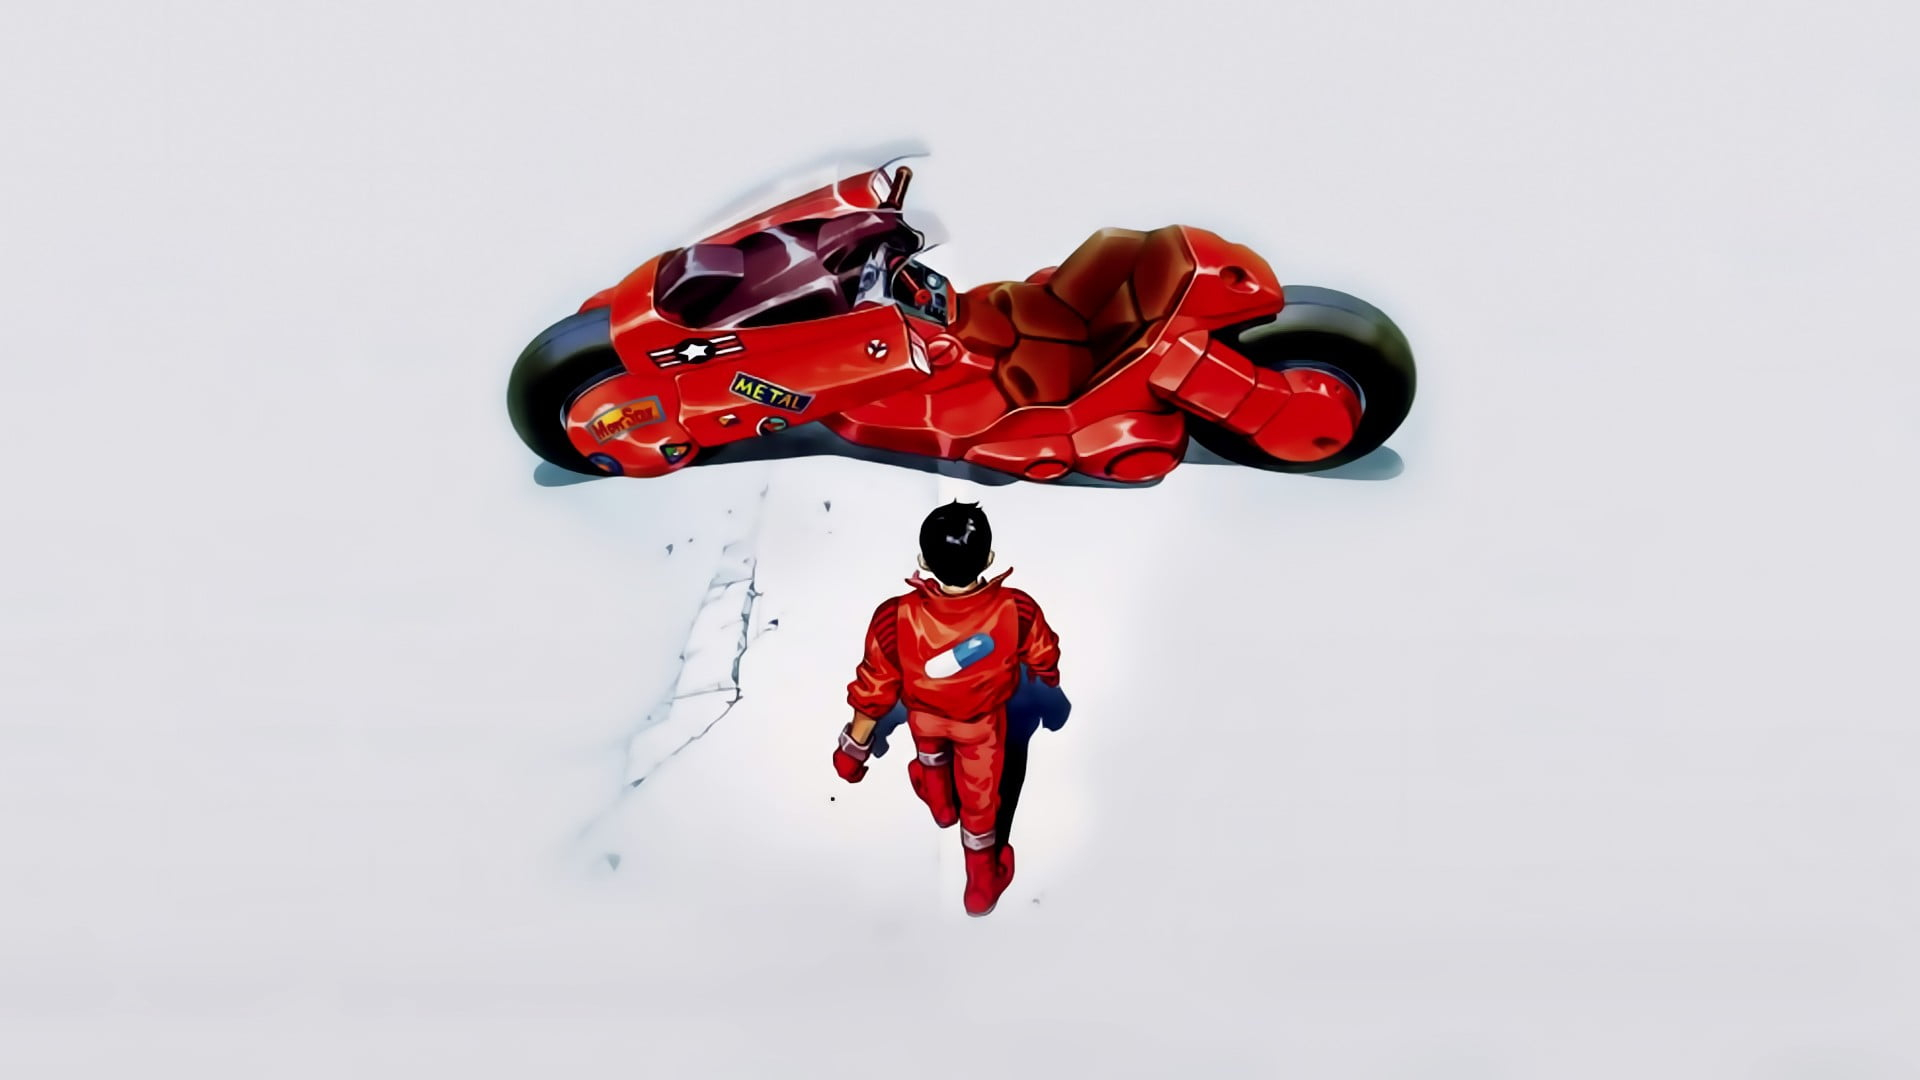 Man in red suit wallpaper, Akira, kaneda, anime, motorcycle, indoors